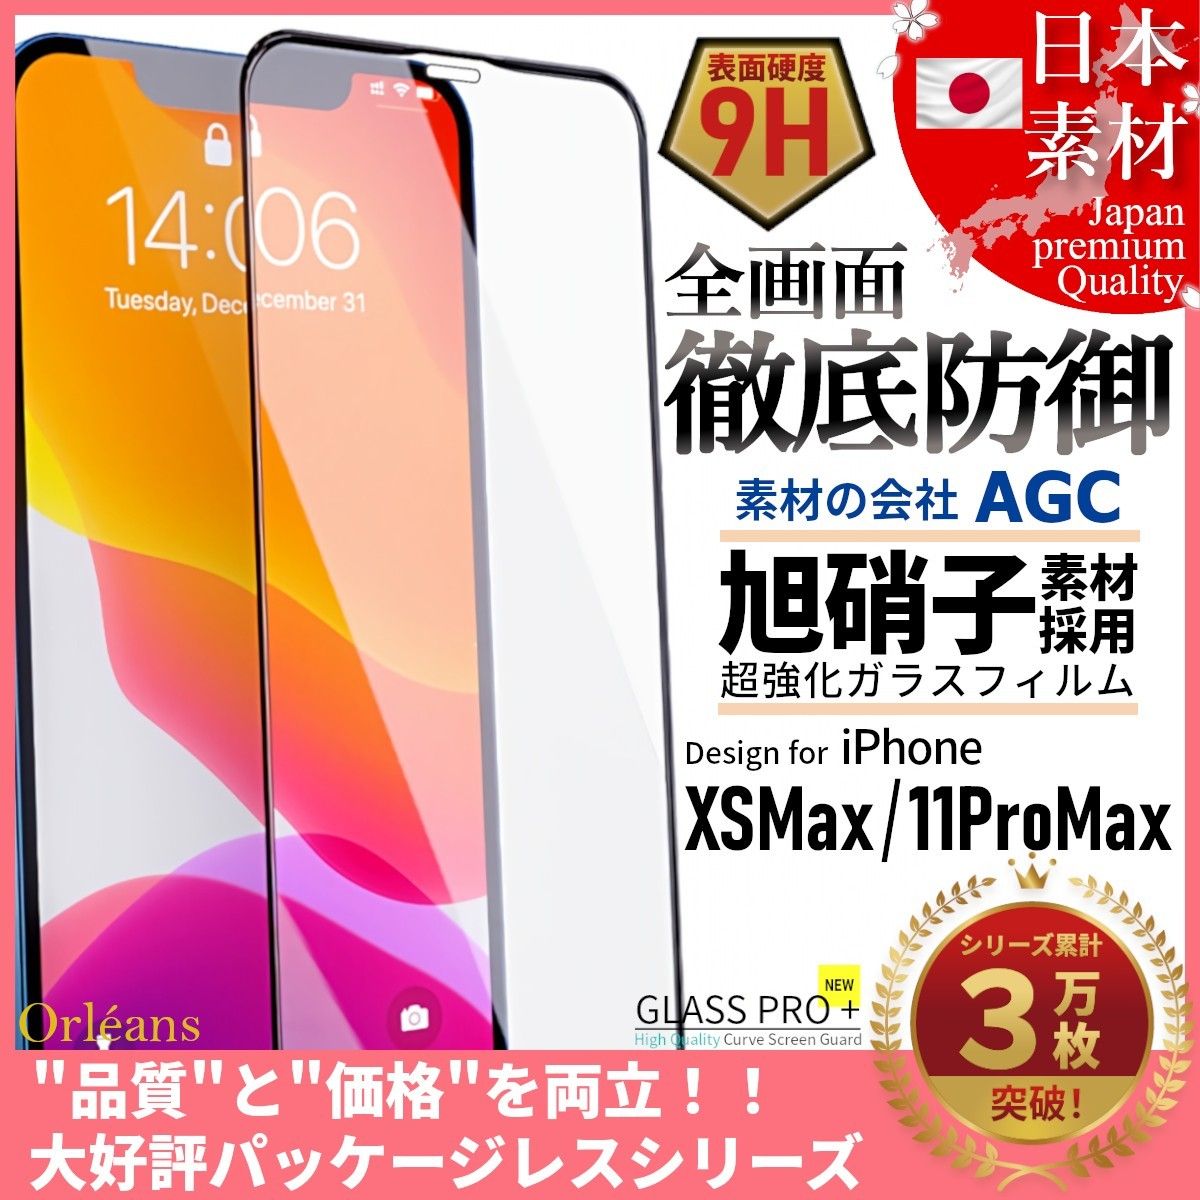 iPhone XS Max 11 ProMax 旭硝子 全面保護 強化ガラス 保護フィルム 液晶保護フィルム ガラスフィルム